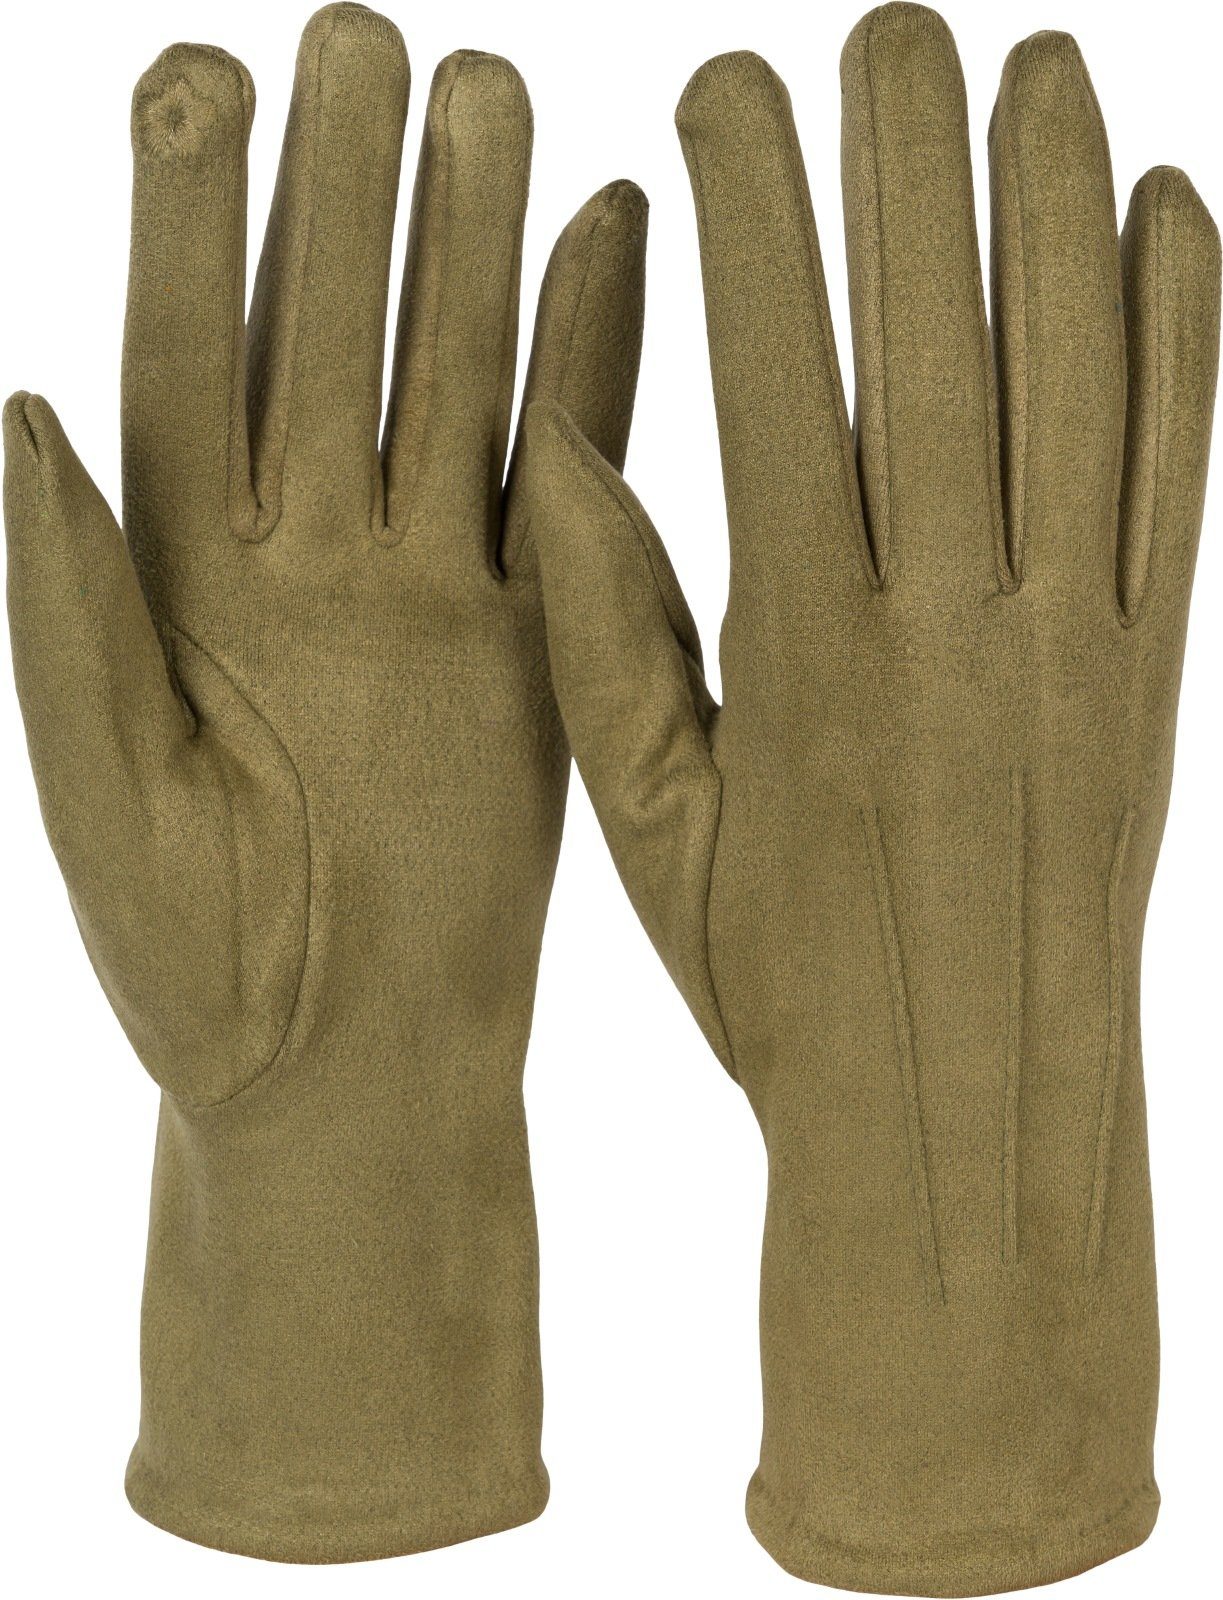 Einfarbige Oliv Fleecehandschuhe Ziernähte Handschuhe Touchscreen styleBREAKER